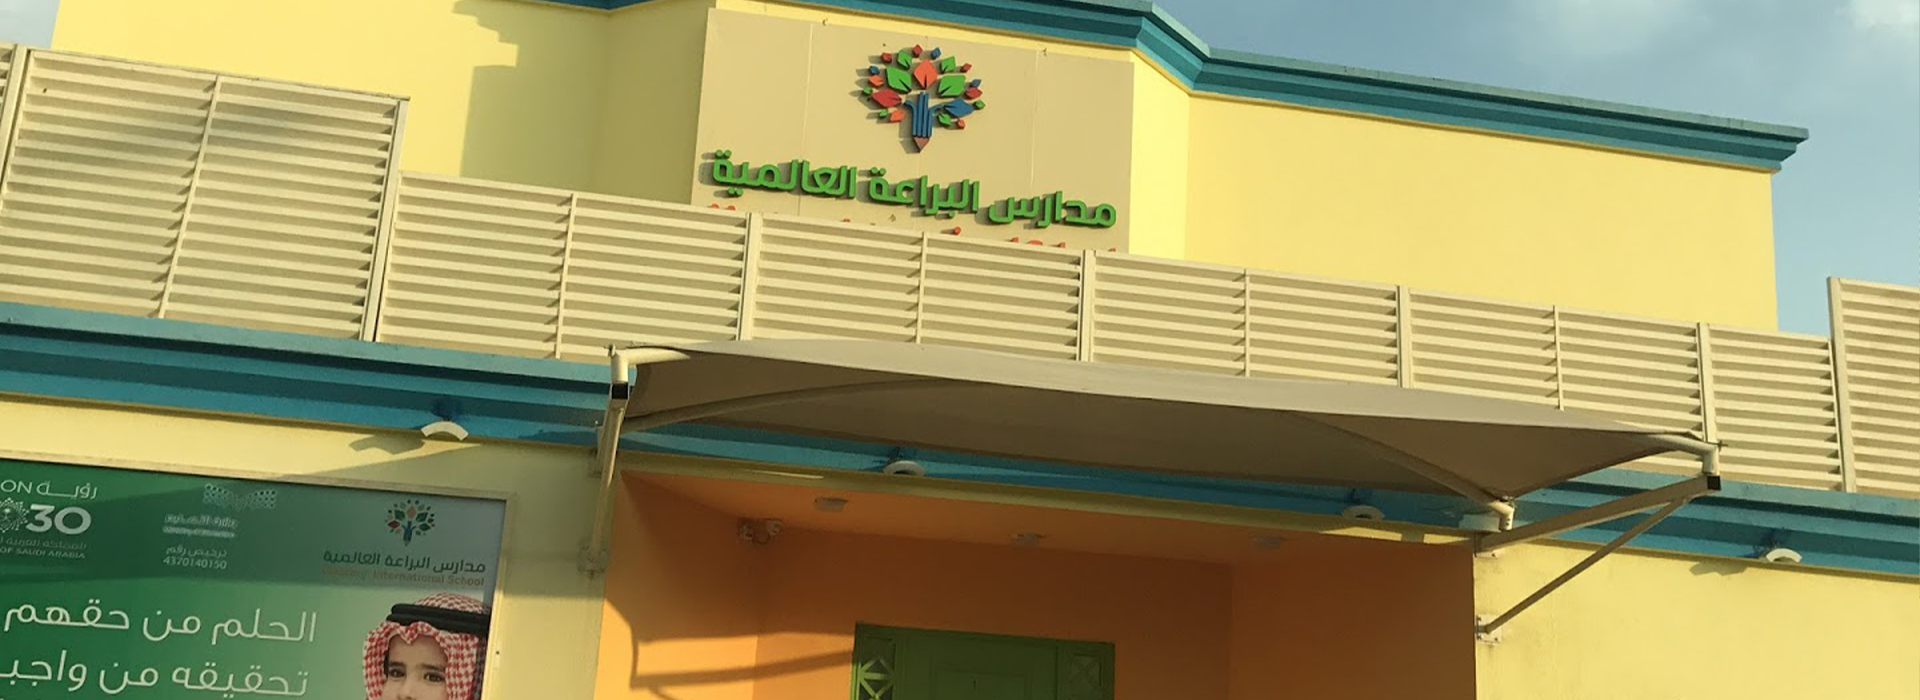 Mastery International School Saudi